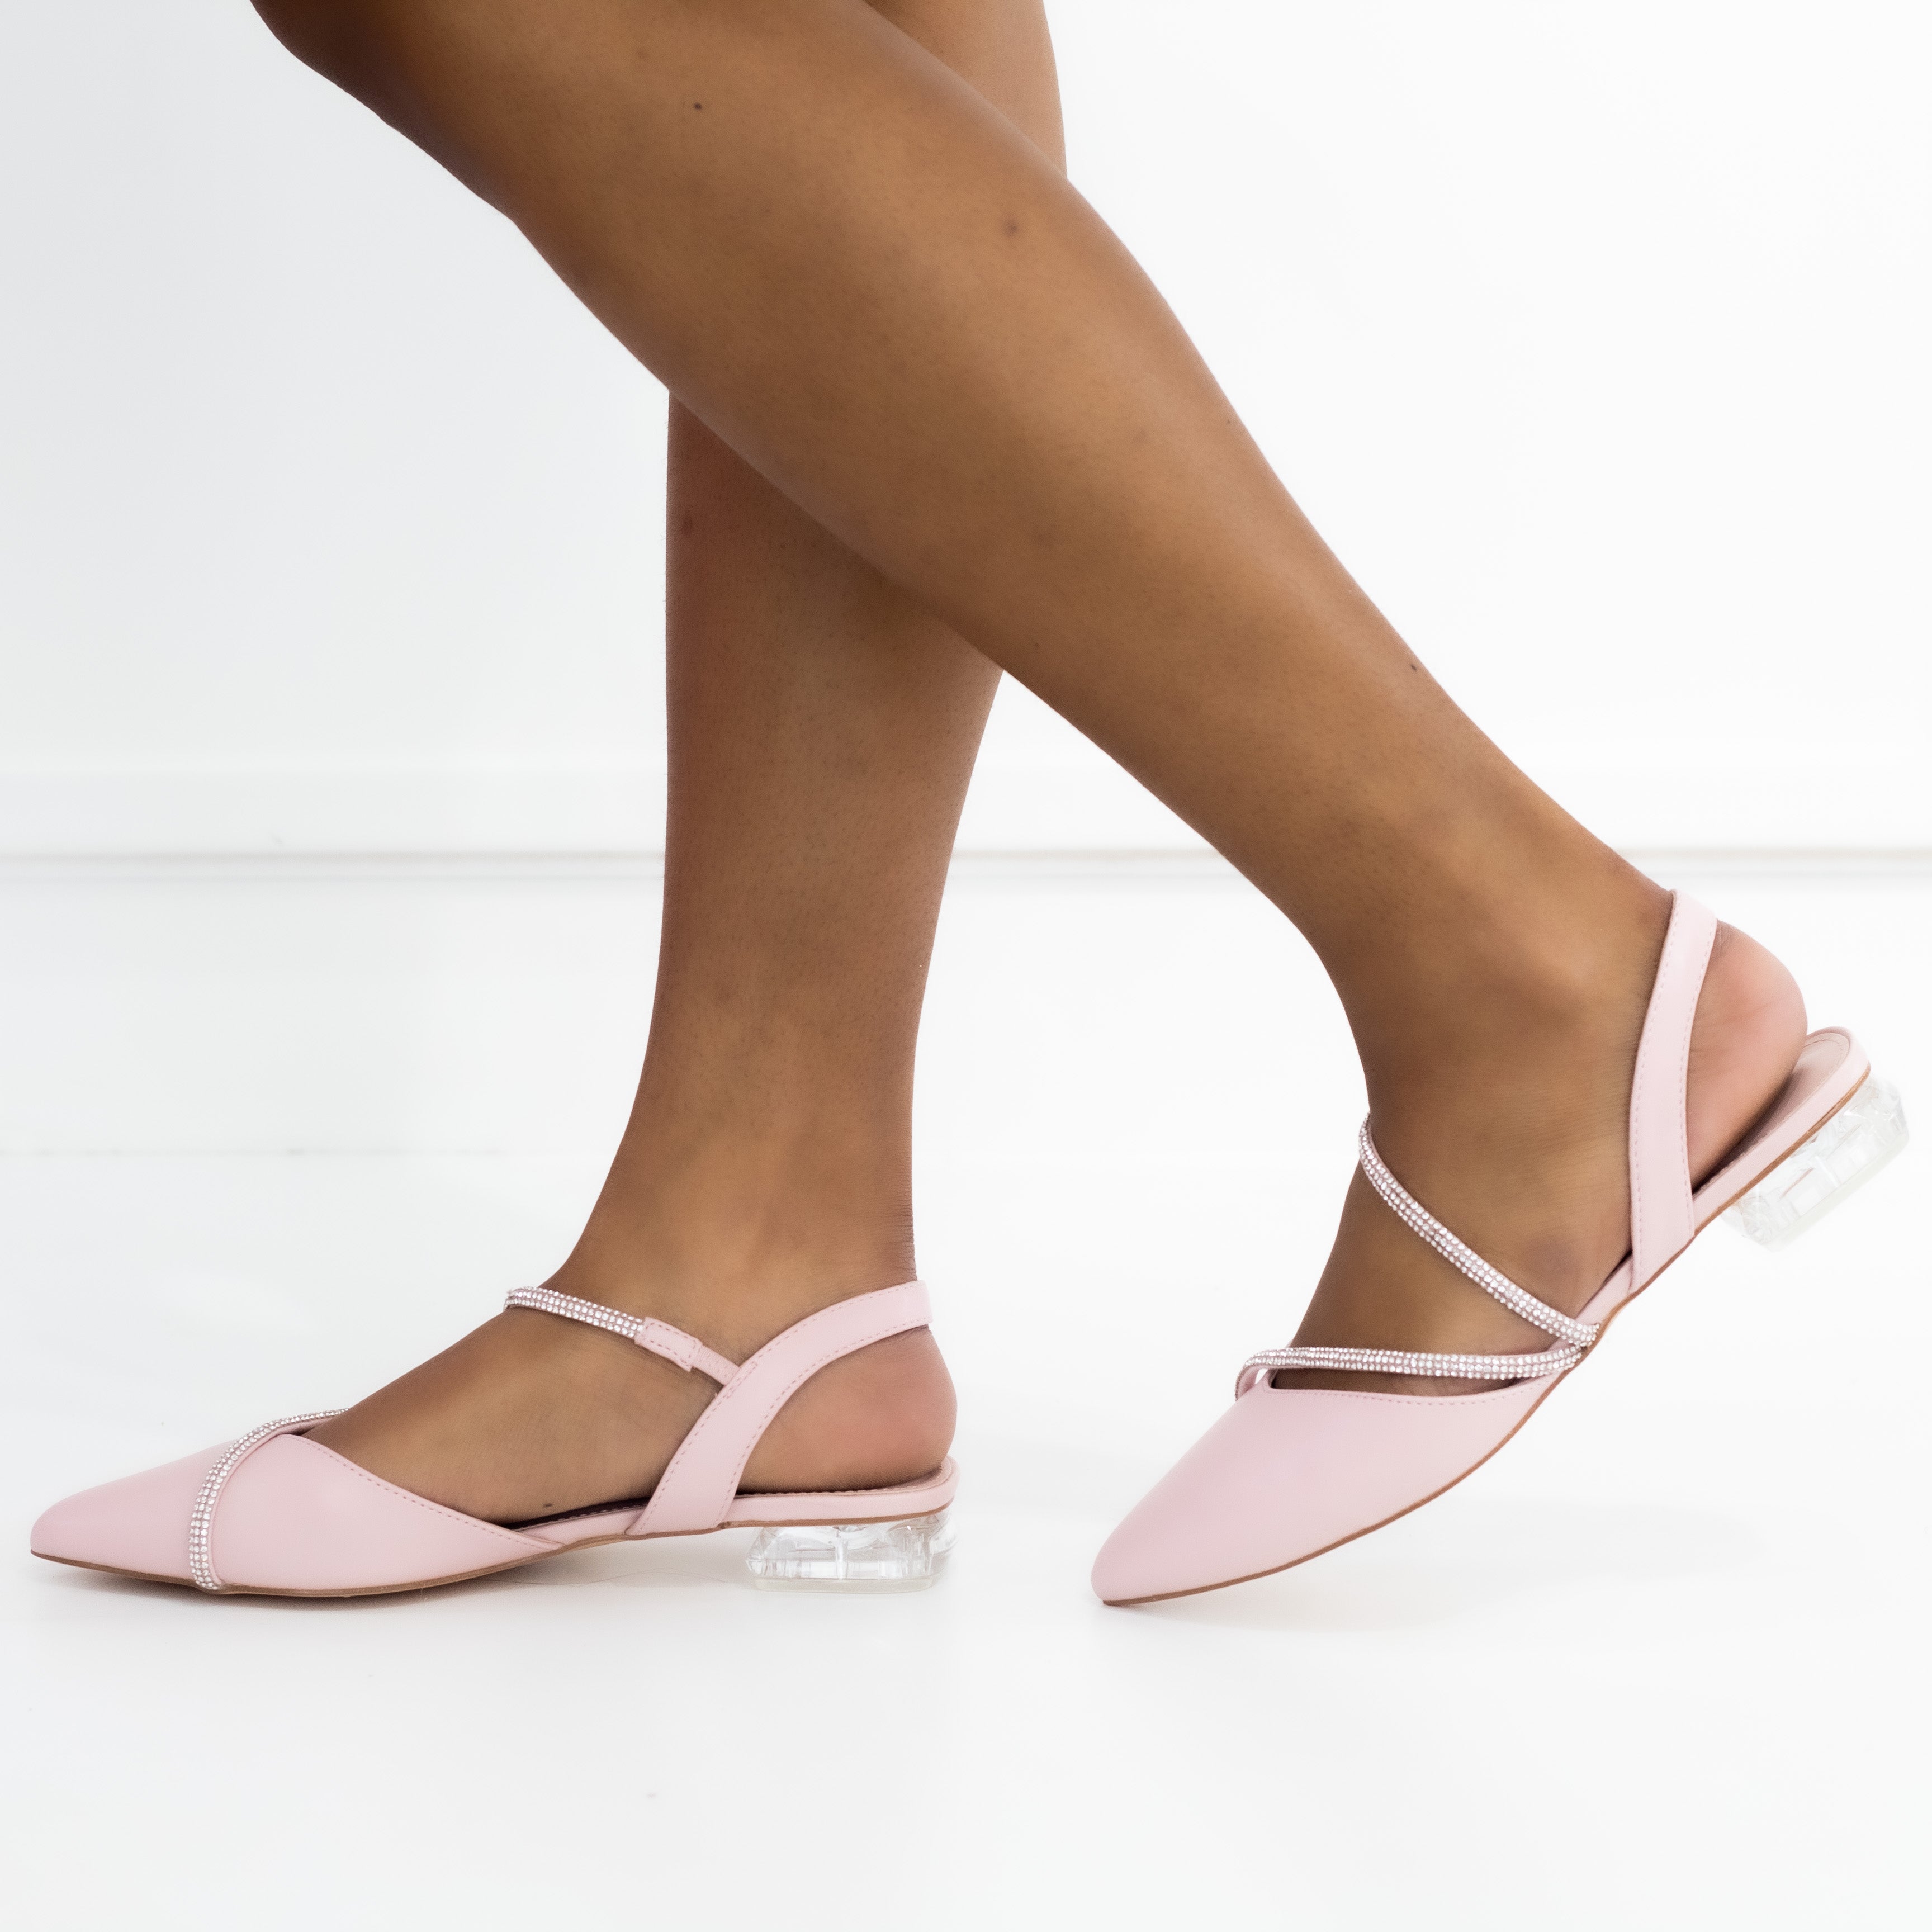 Giordana 2cm heel flat pump with diamanate detailed pink